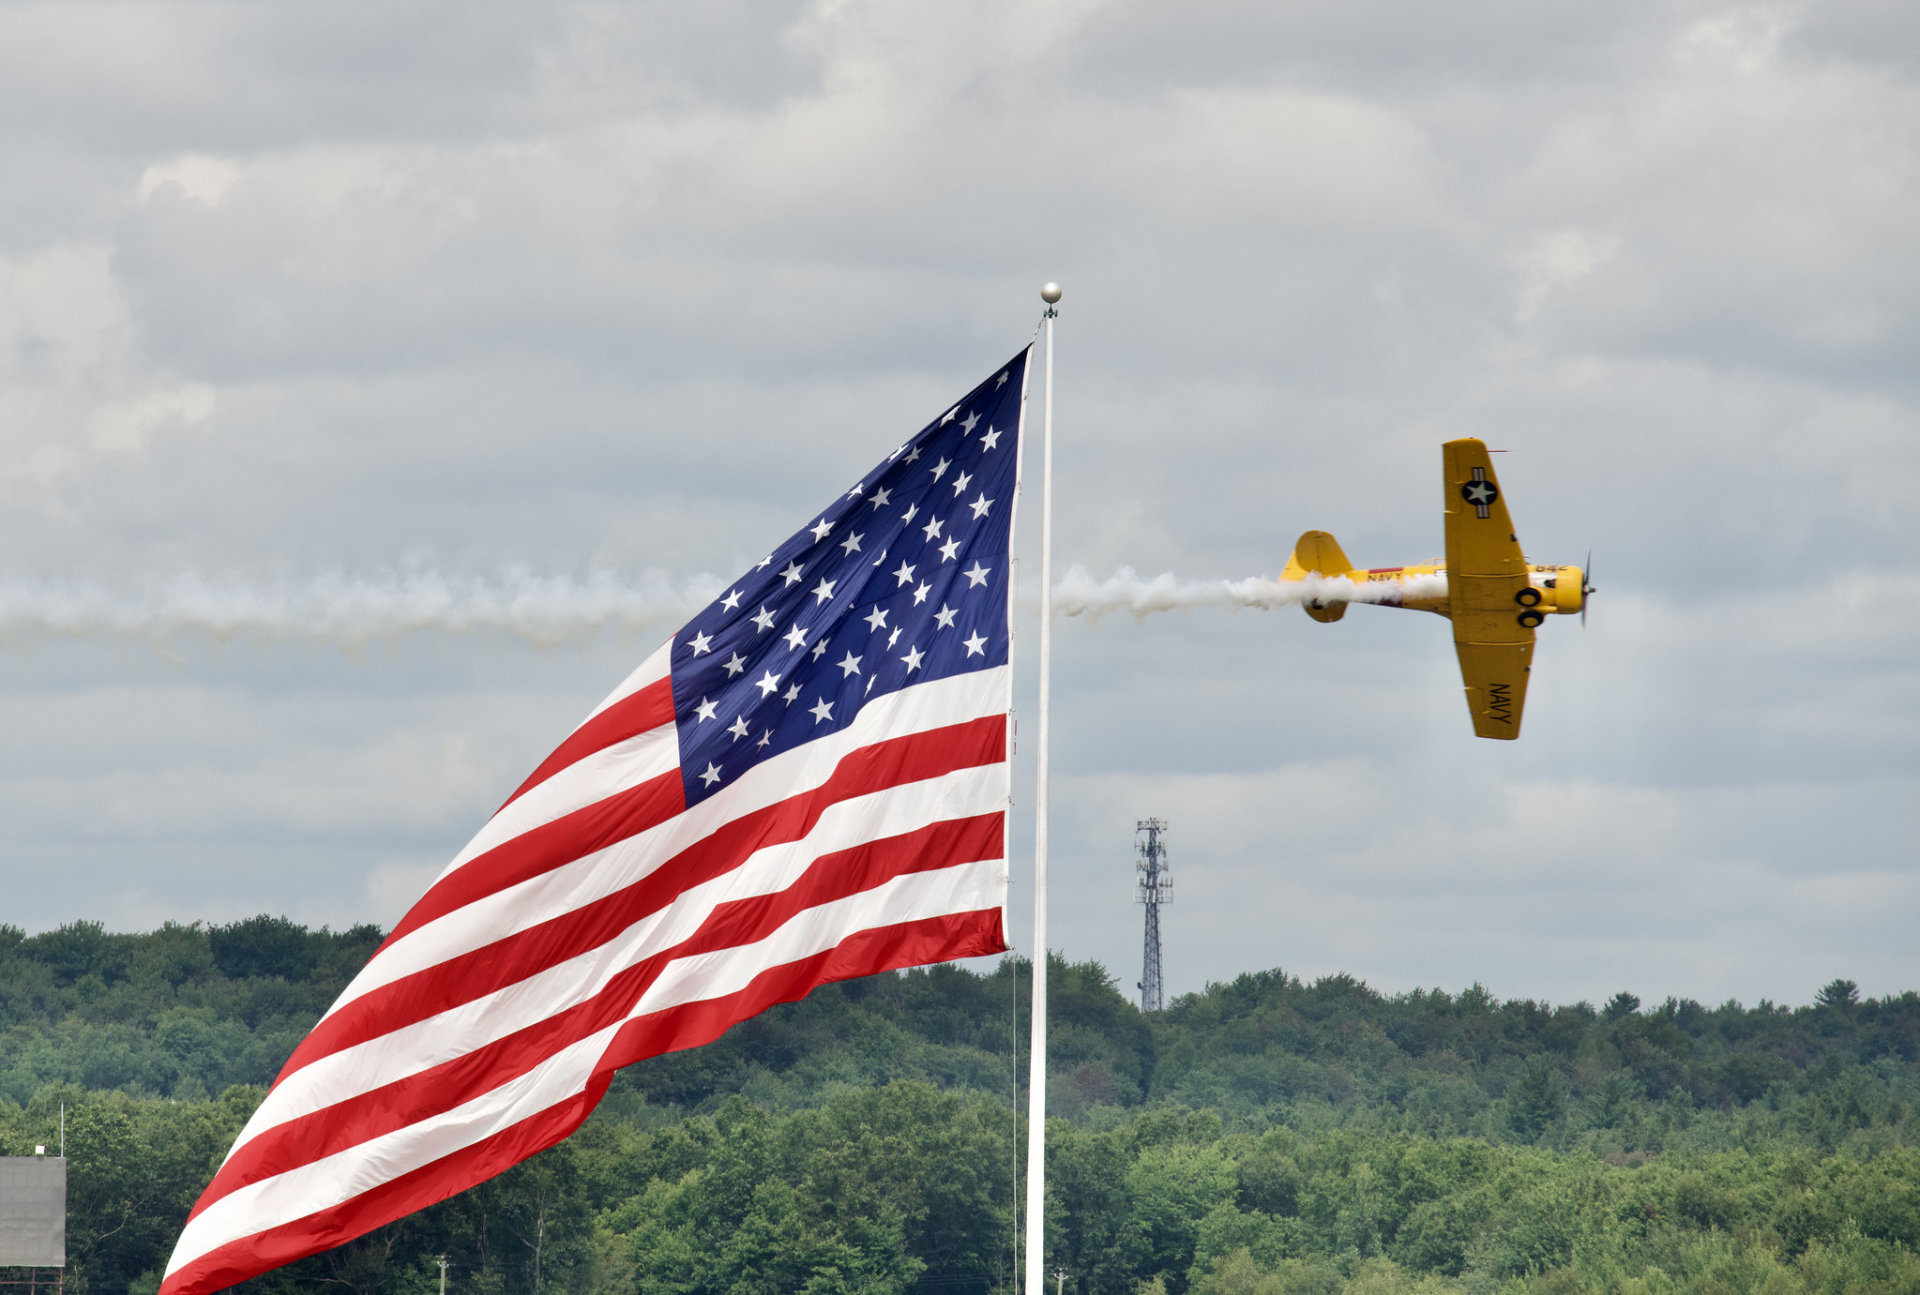 The Great Pocono Raceway Airshow